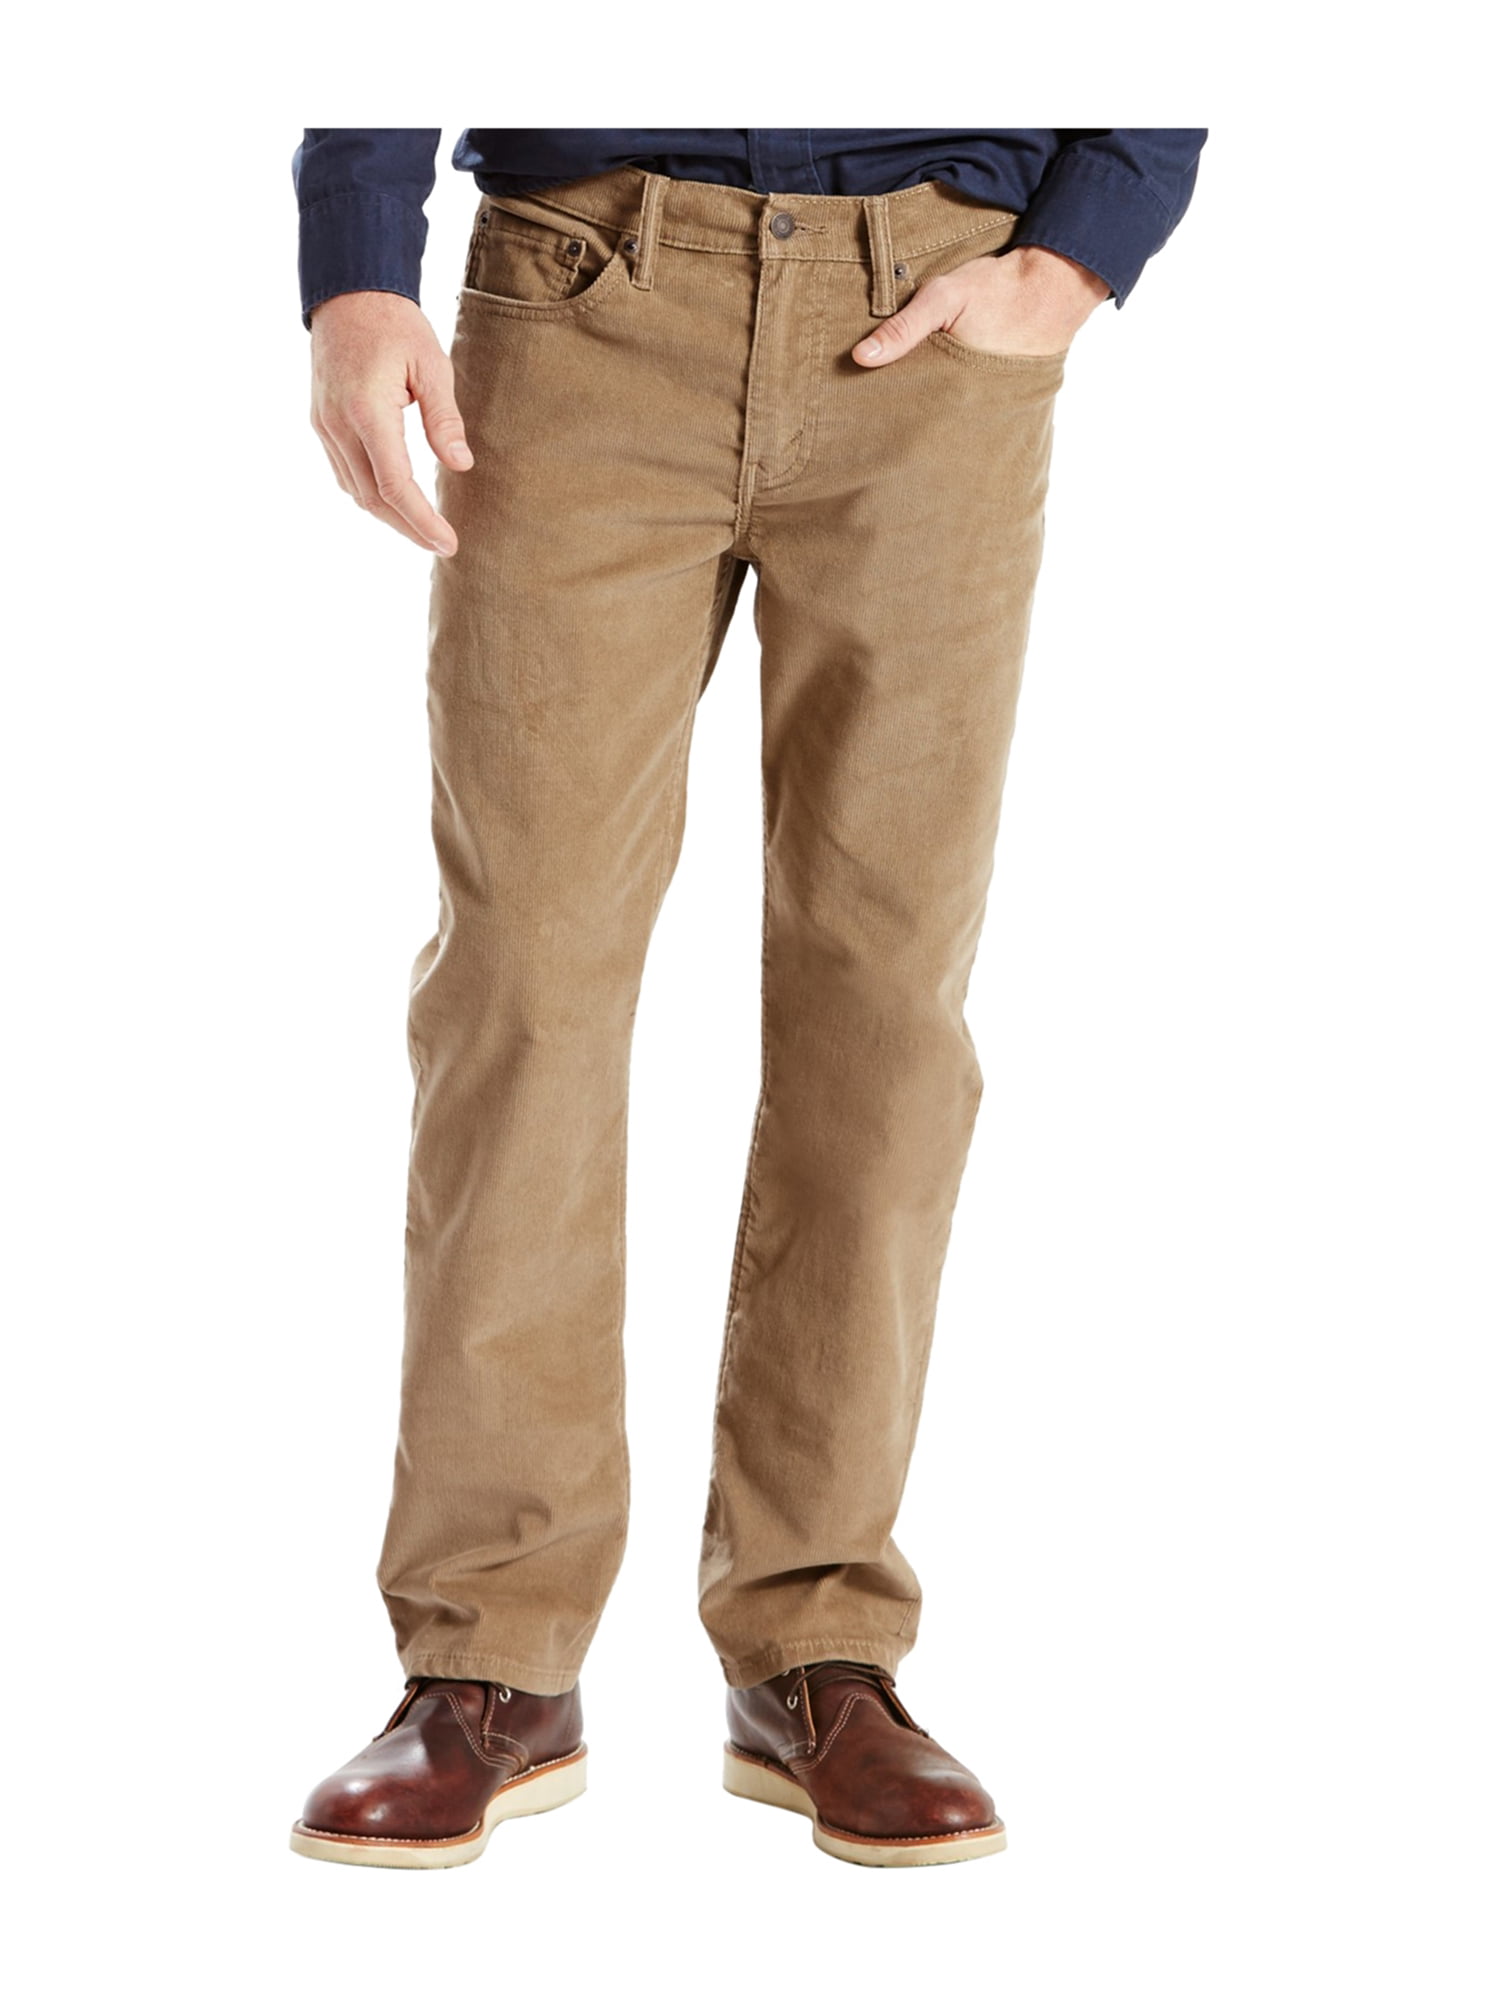 Levi's Mens Bedford Corduroy Slim Fit Jeans brown 29x32 | Walmart Canada